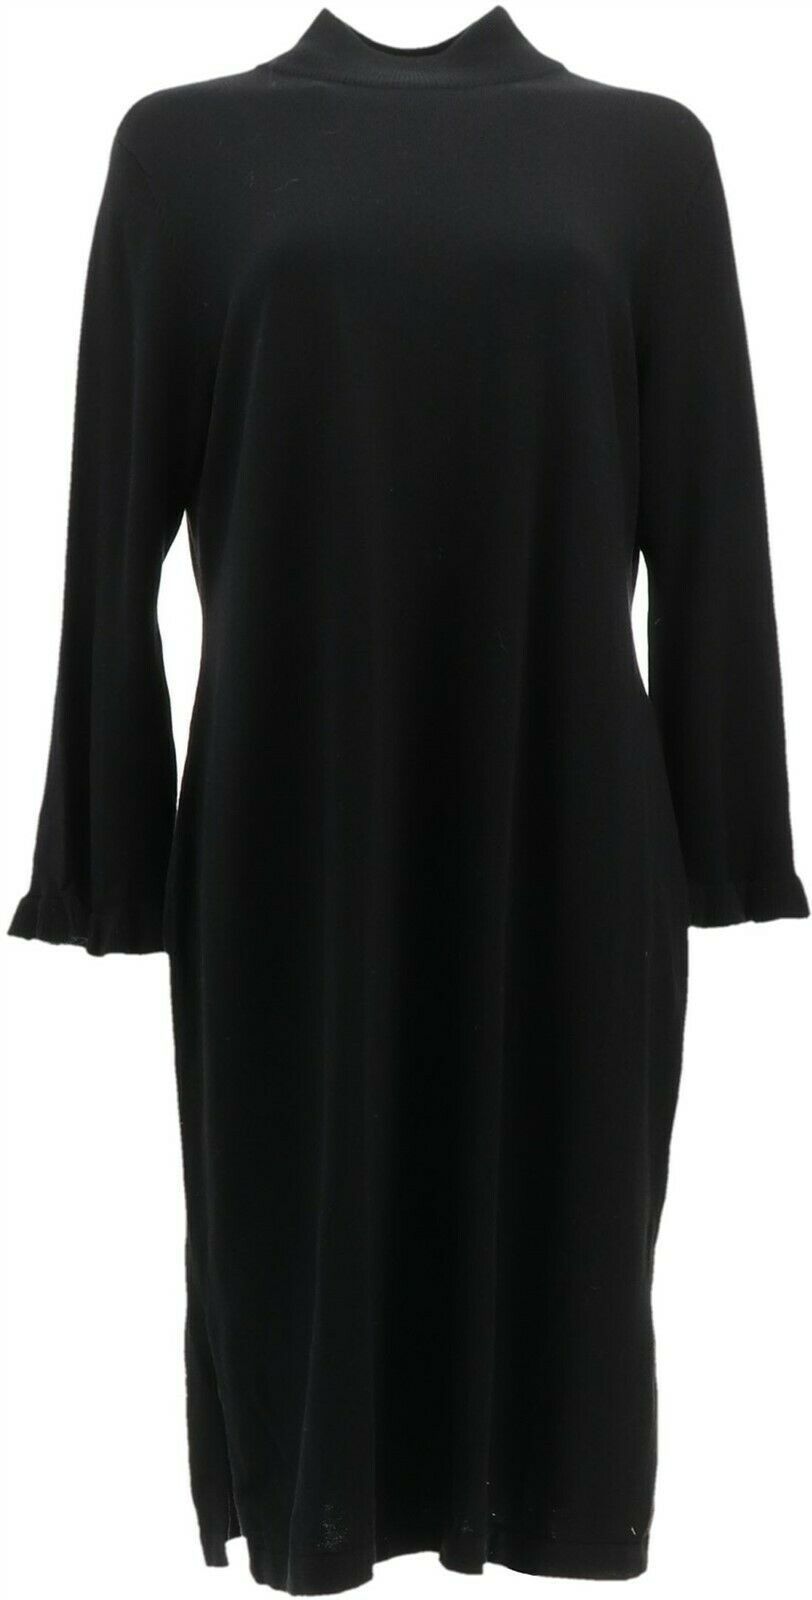 Isaac Mizrahi Petite Bell Slv Sweater Dress Black PXXS NEW A343218